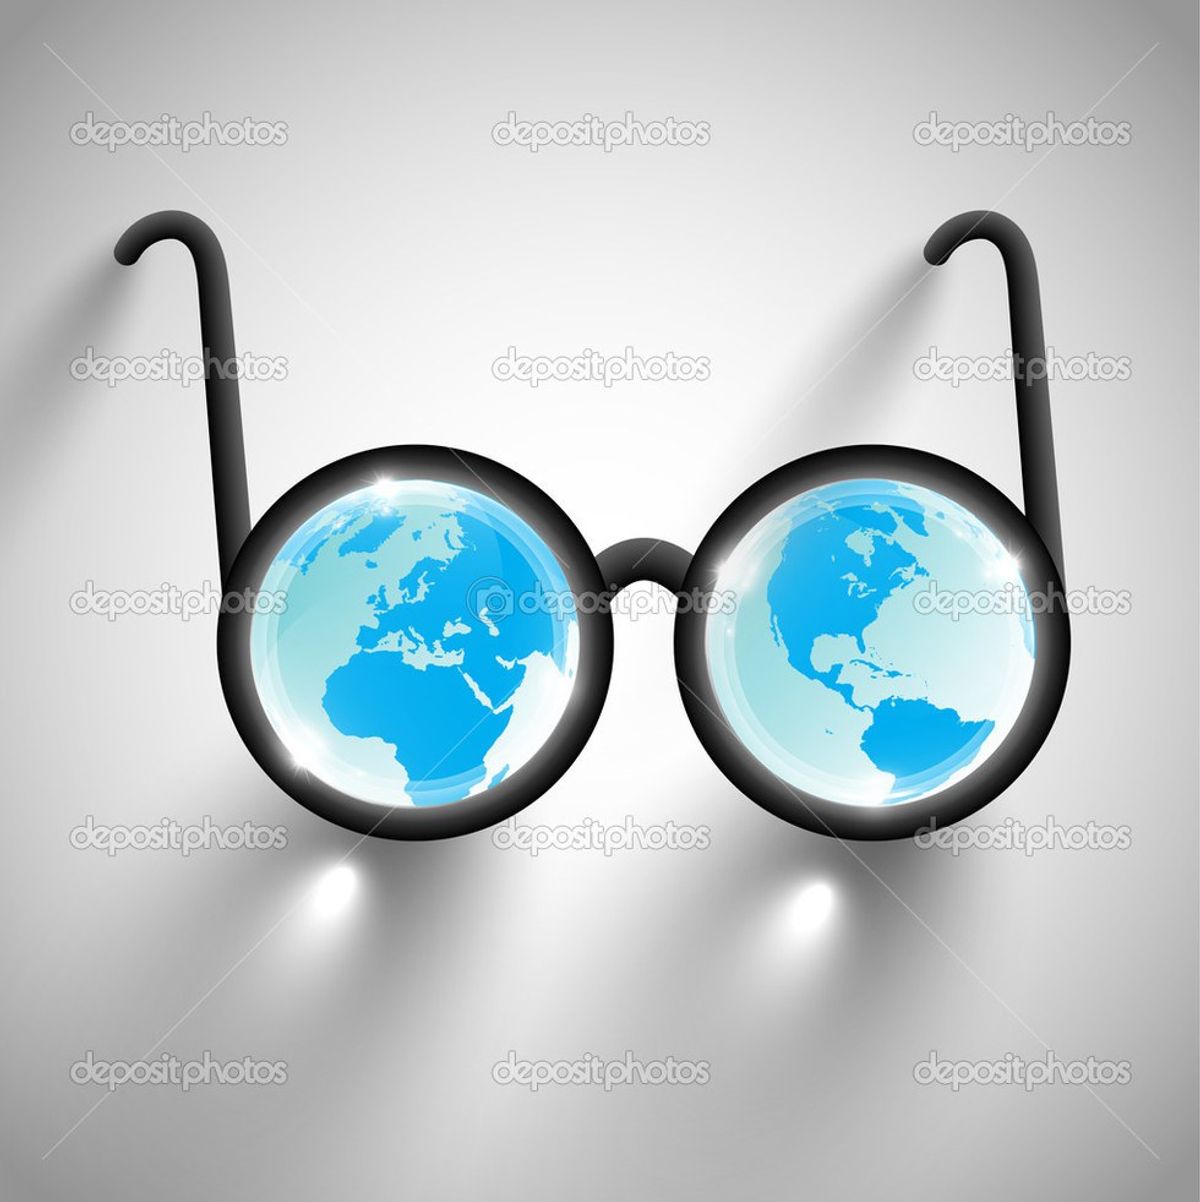 Identifying Worldviews